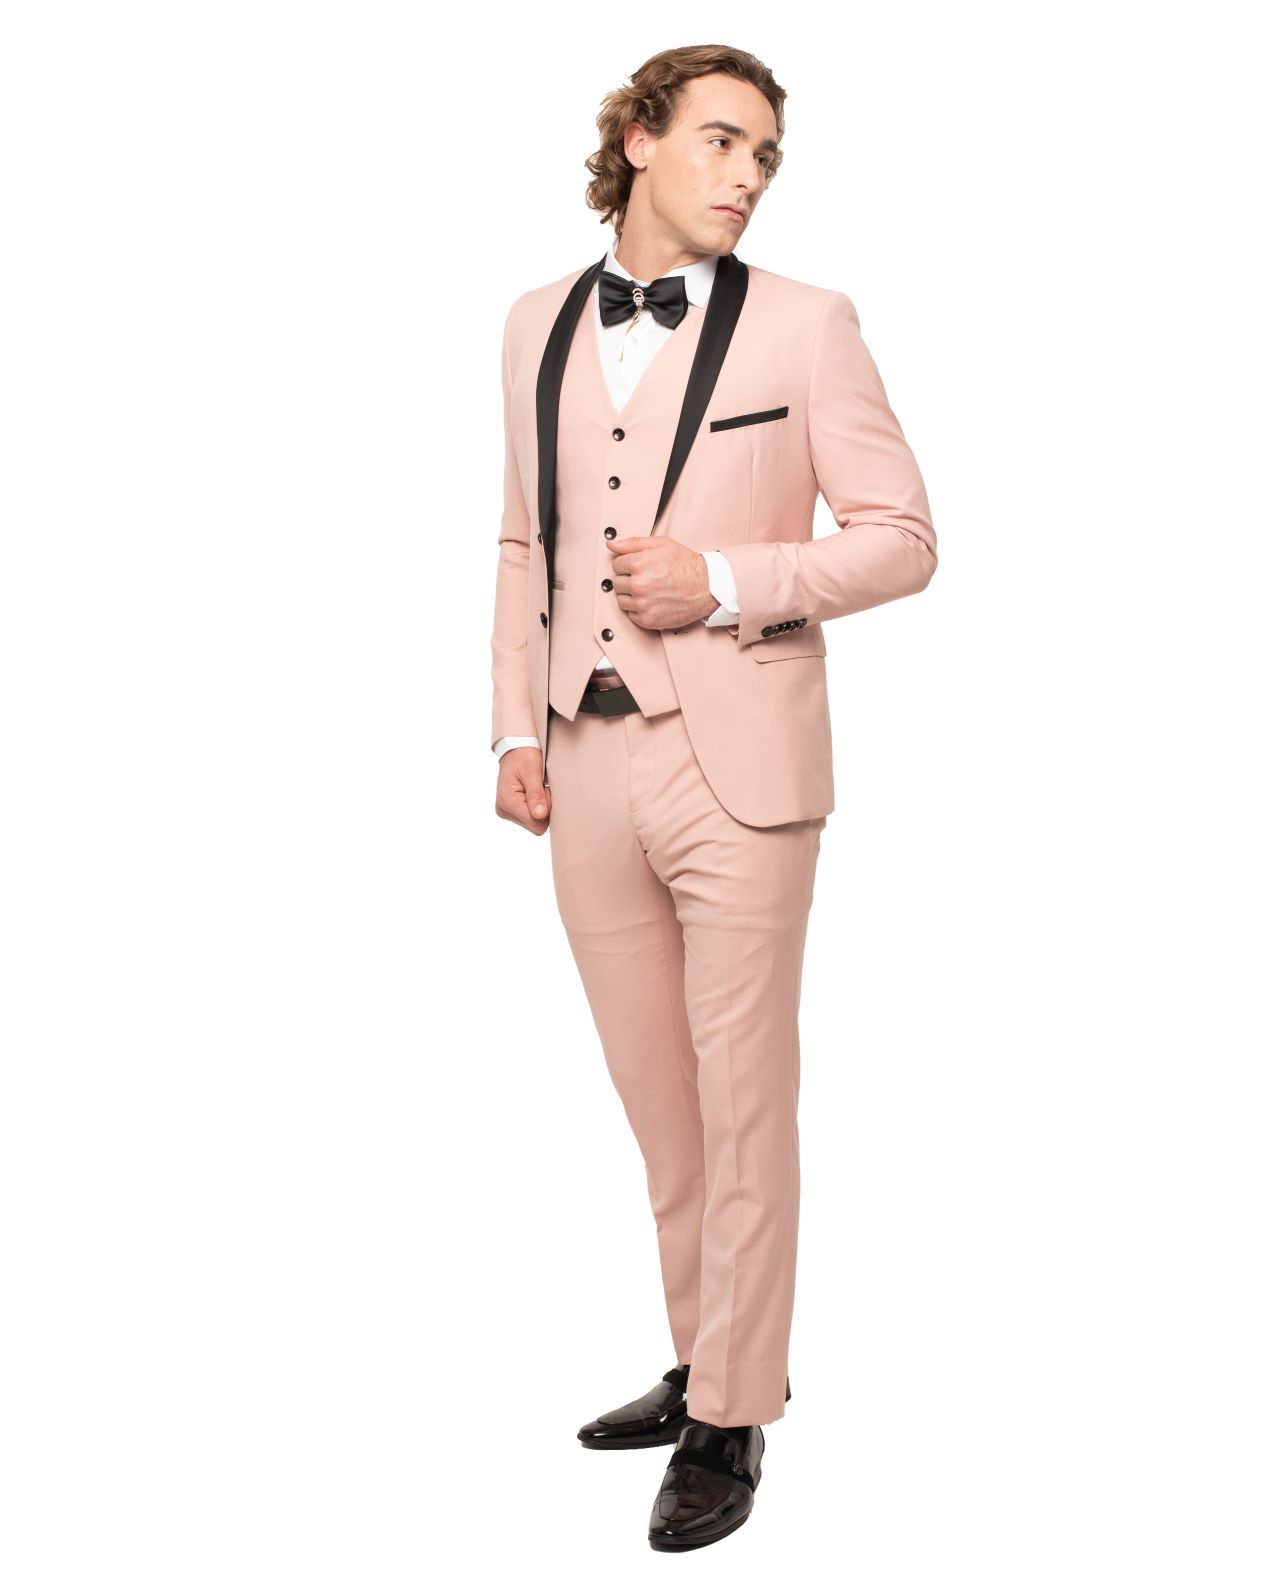 Shop Tuxedos - Classic, Modern and Slim Fit - SuitFellas – Suitfellas